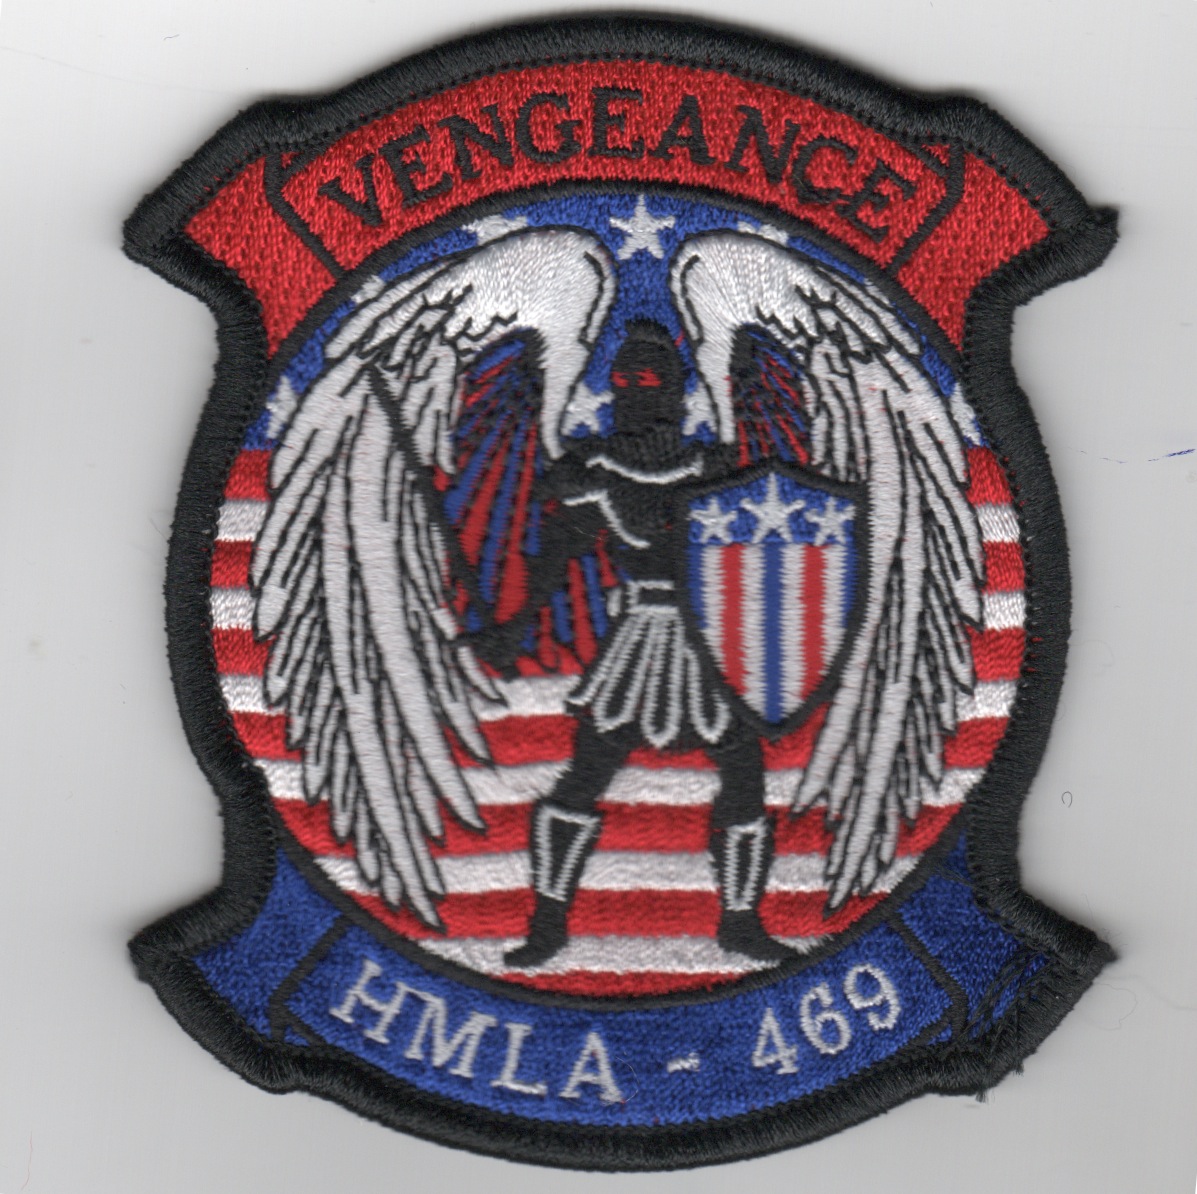 HMLA-469 'Vengeance' (R/W/B)